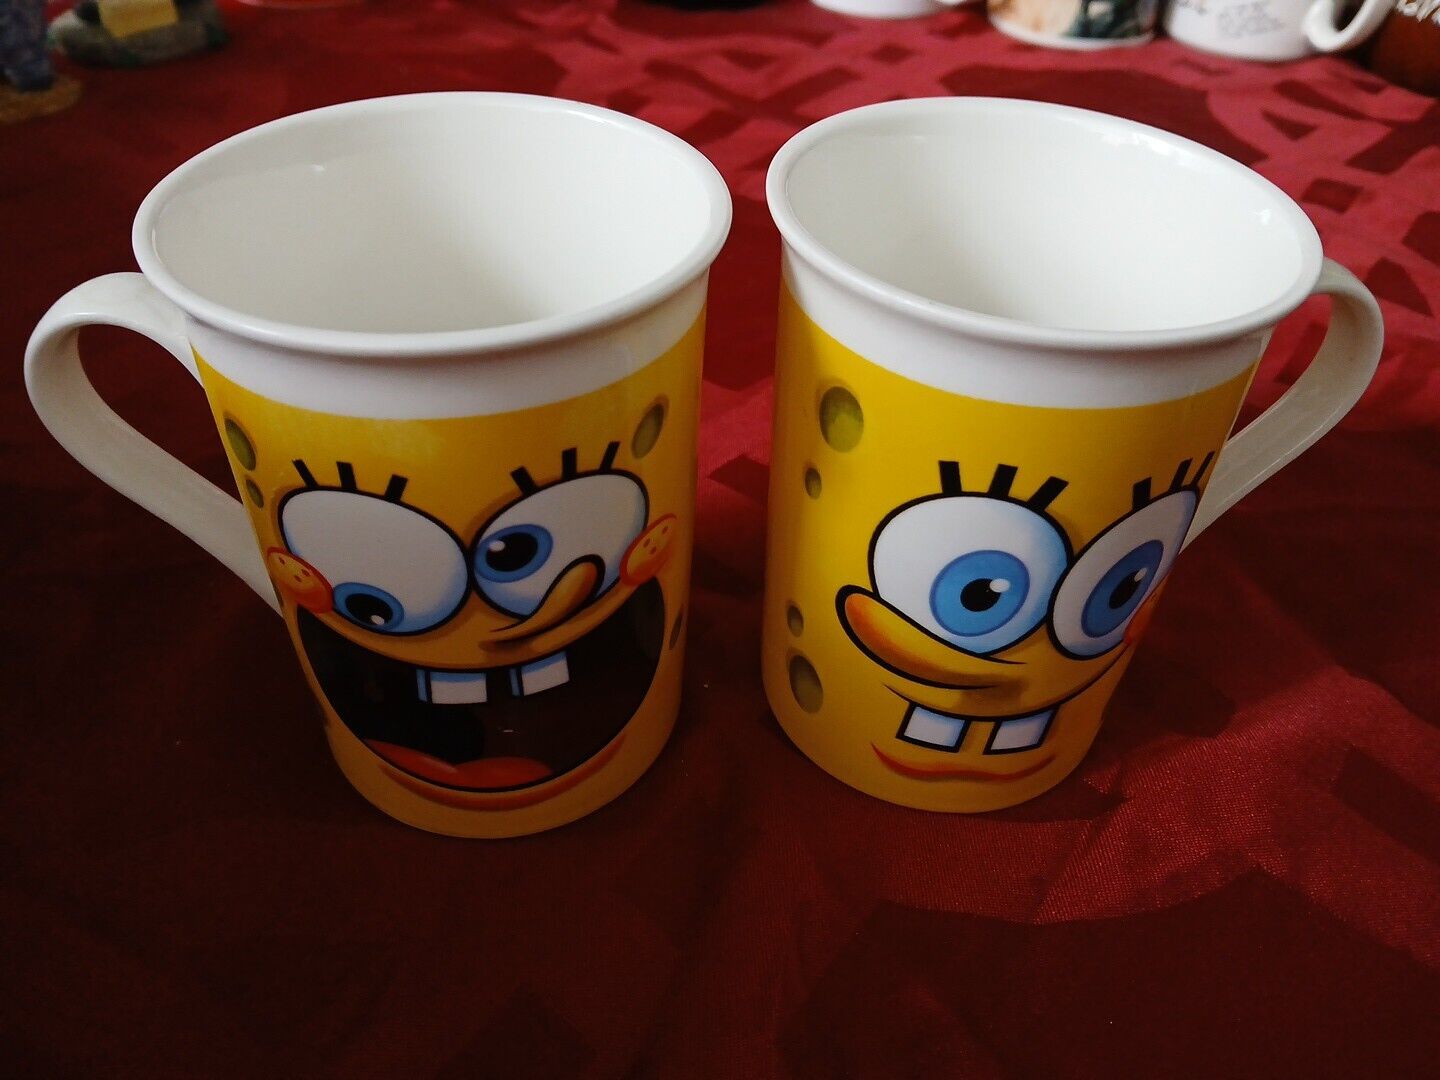 Set of 2 SpongeBob Coffee Mug Cup / Sponge Bob Squarepants faces by Viacom